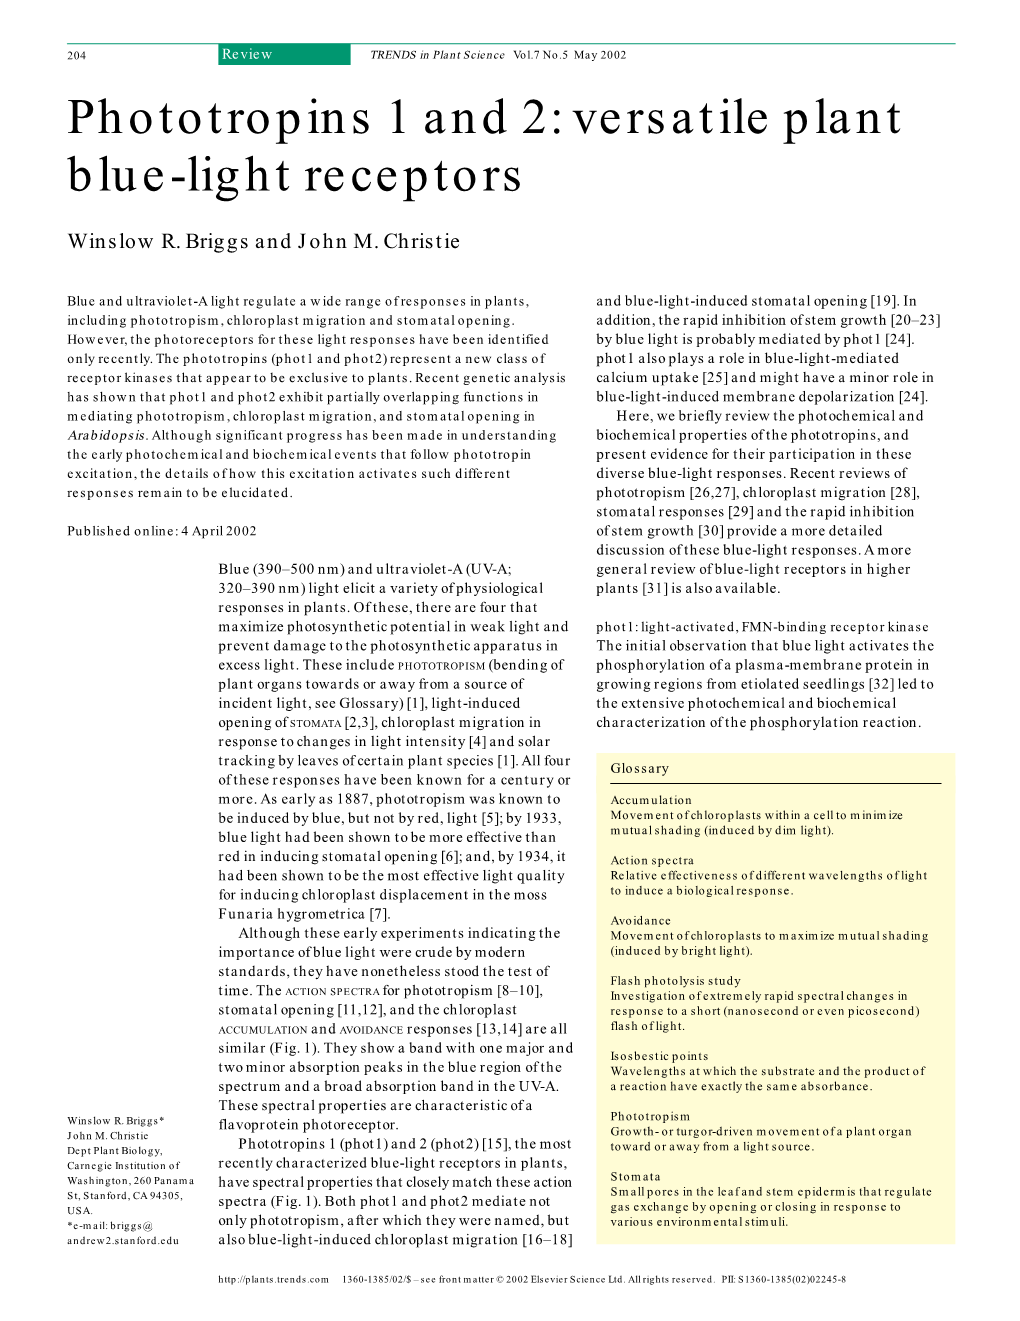 Phototropins 1 and 2: Versatile Plant Blue-Light Receptors